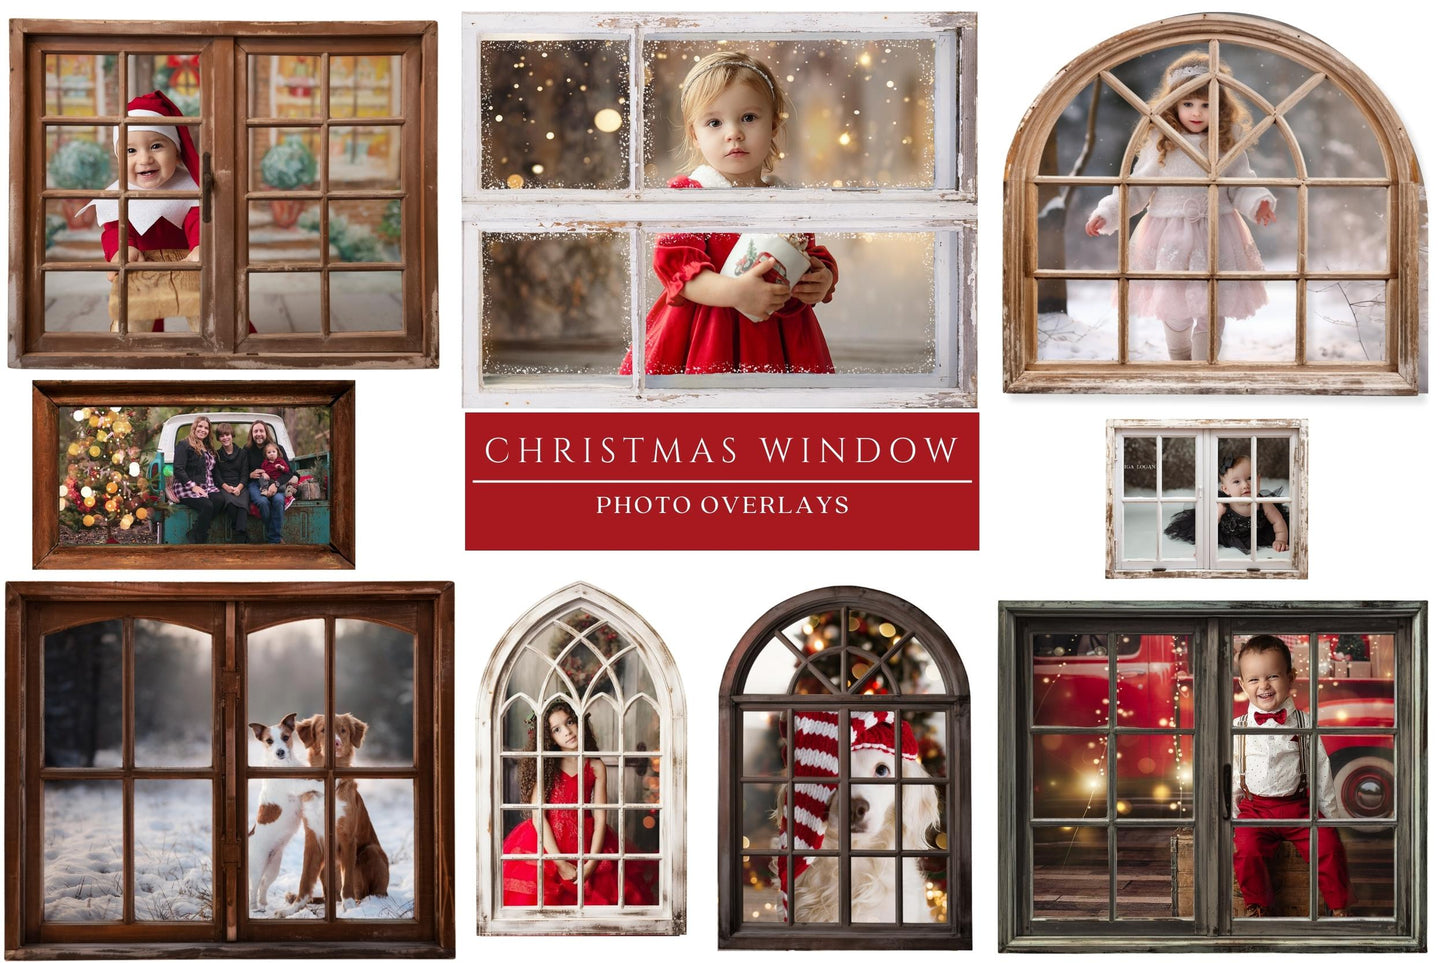 Christmas Window Frame Photo Overlays